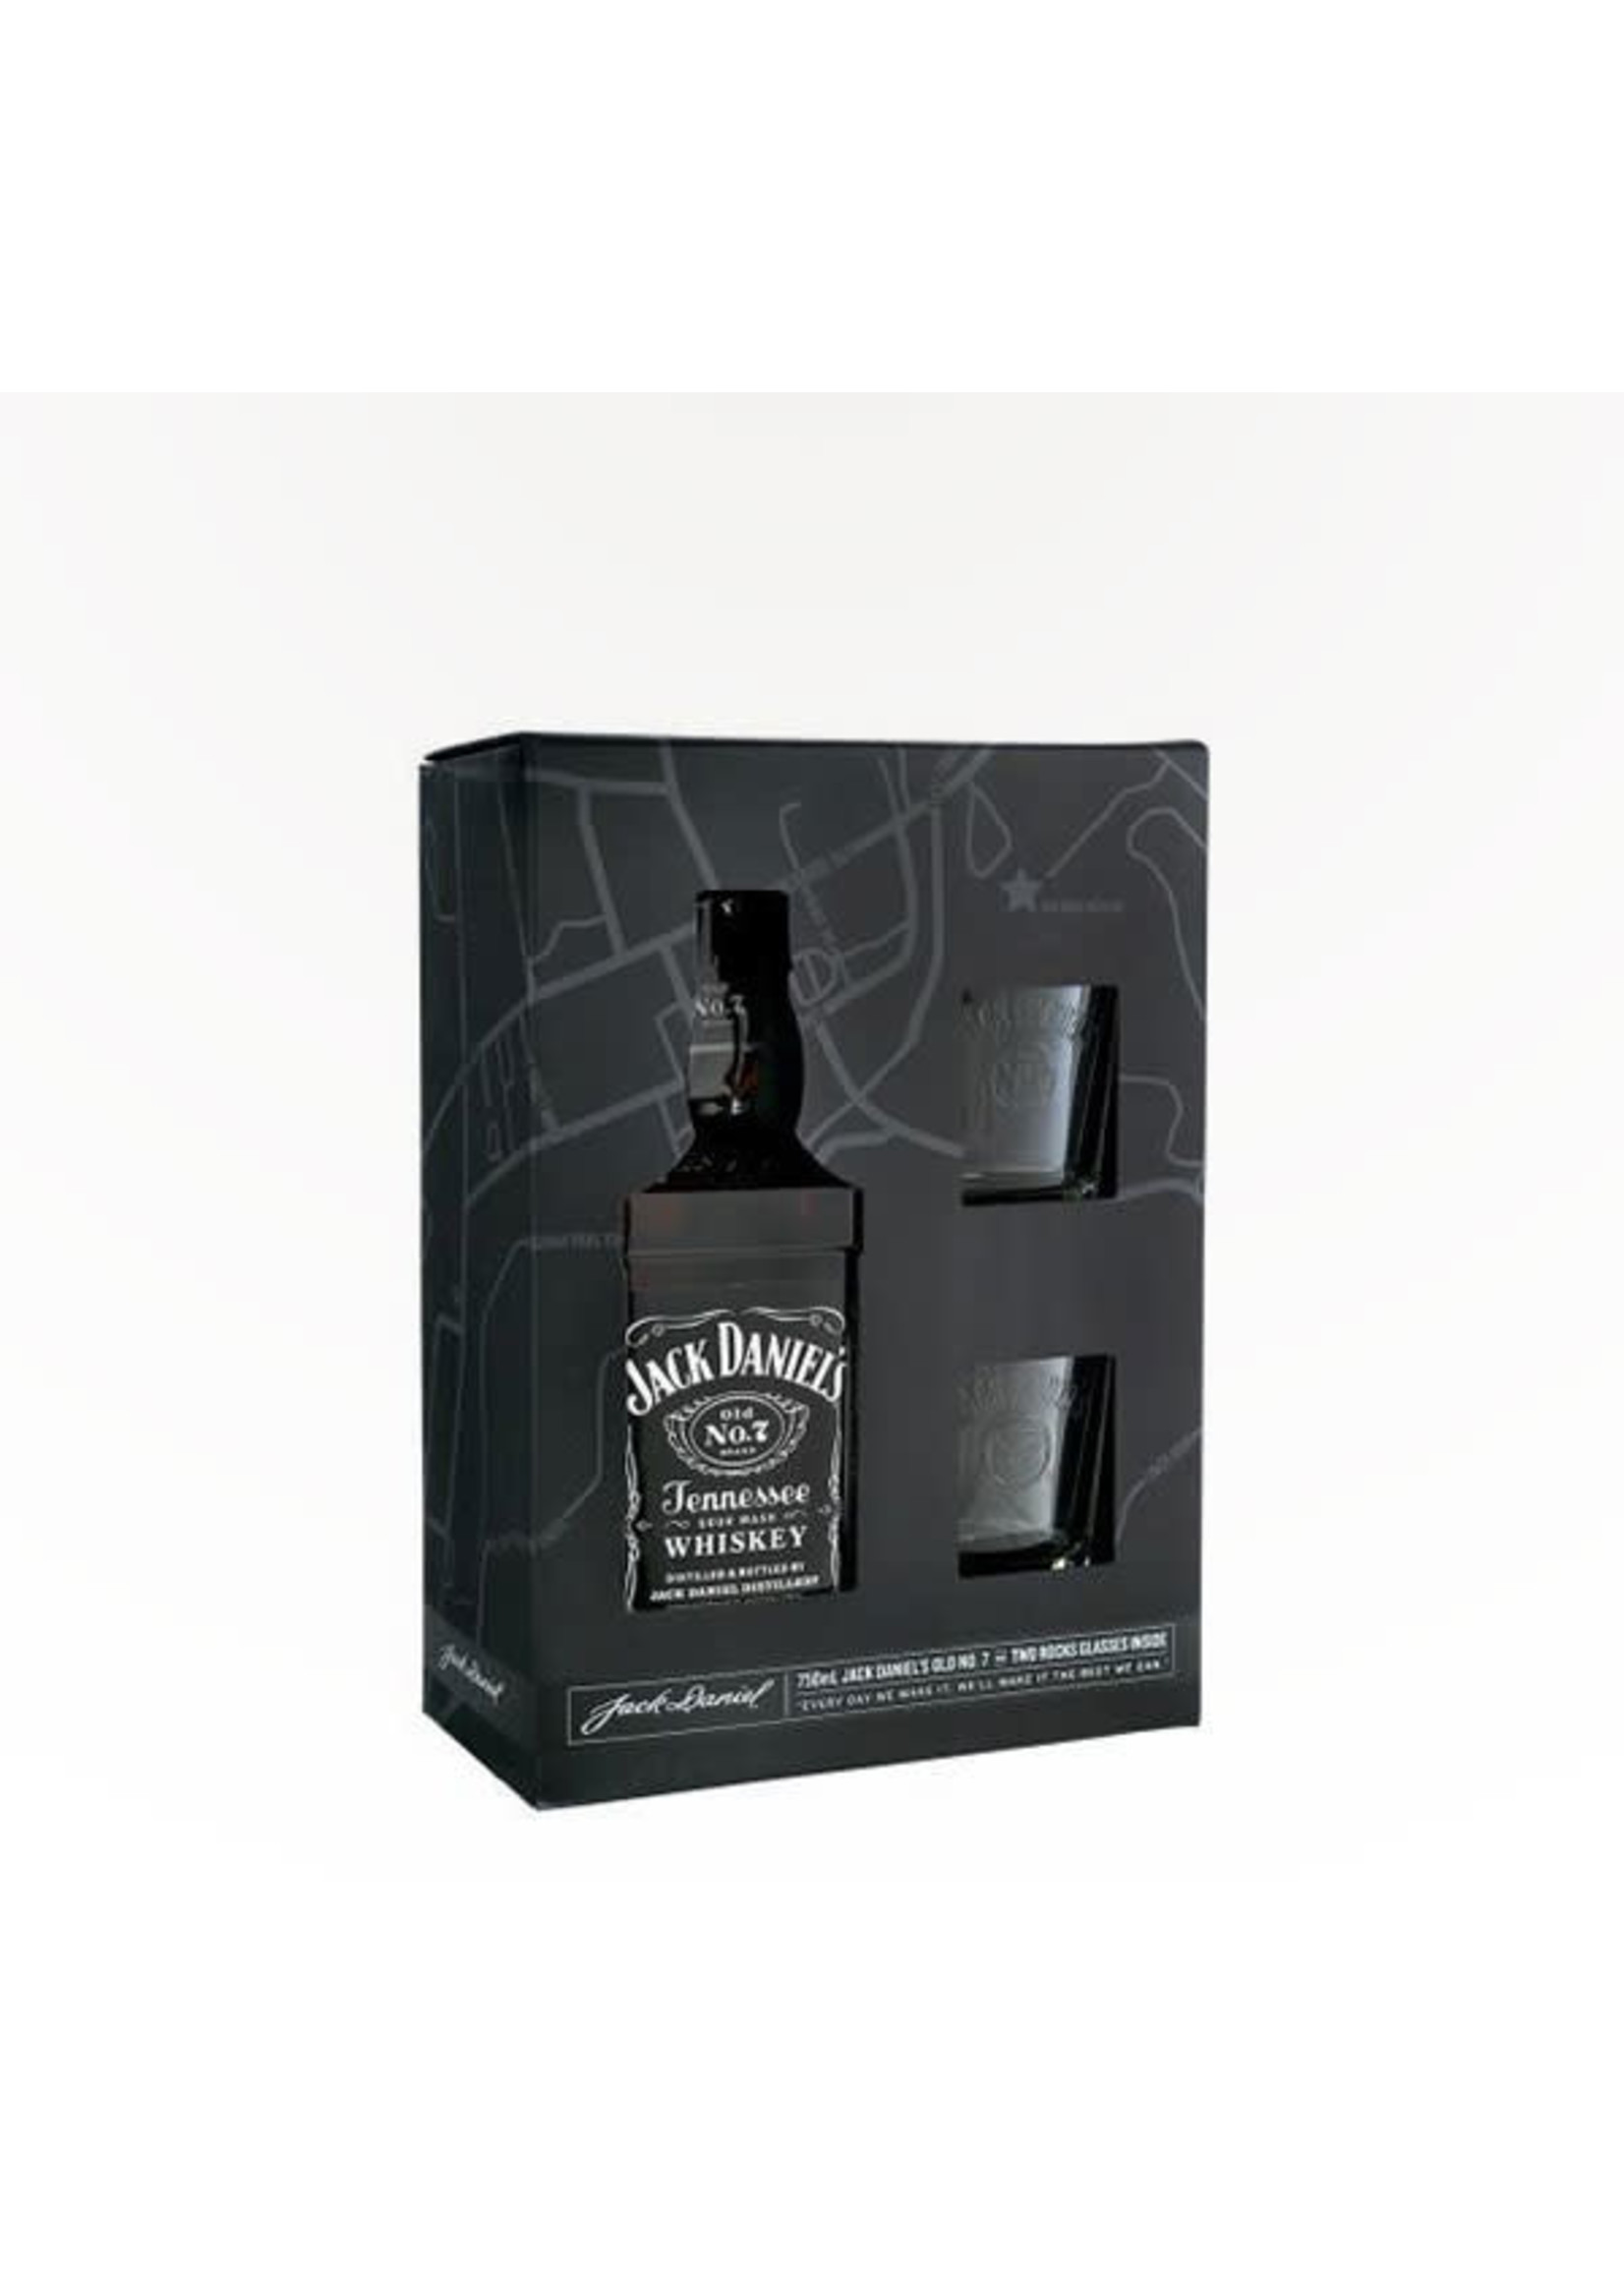 Jack Daniels Jack Daniel's Old No. 7 Tennessee Whiskey 80Proof W/2 Rock Glasses 750ml